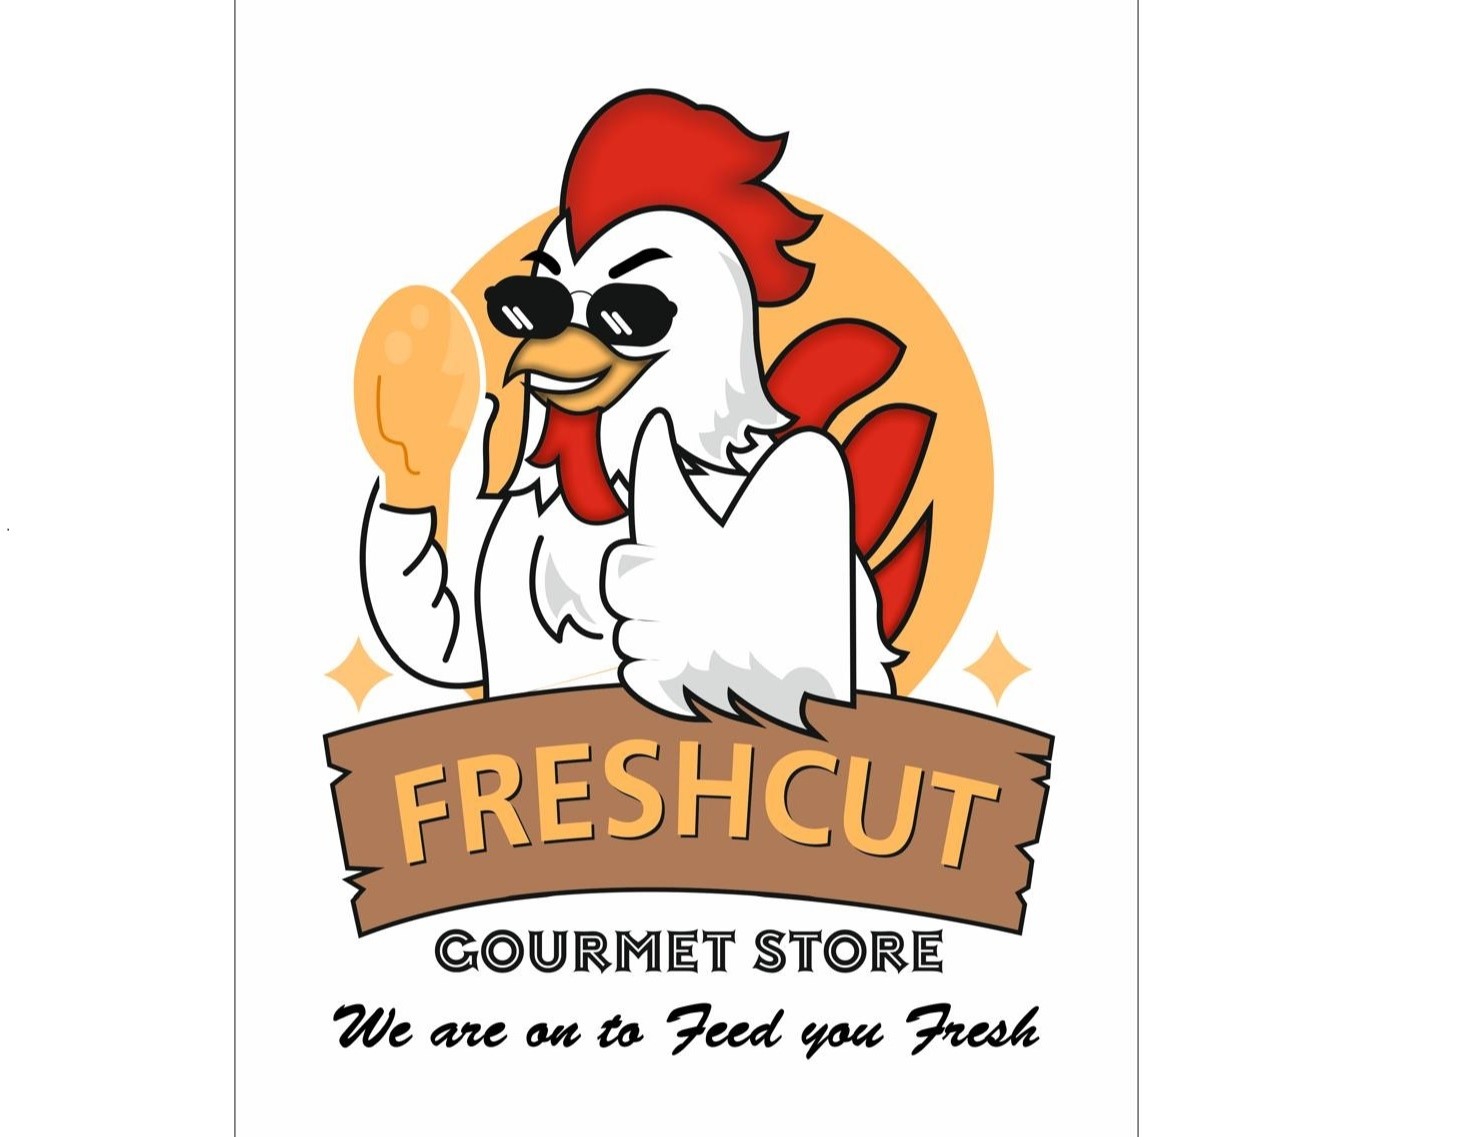 Freshcut Gourmet Store